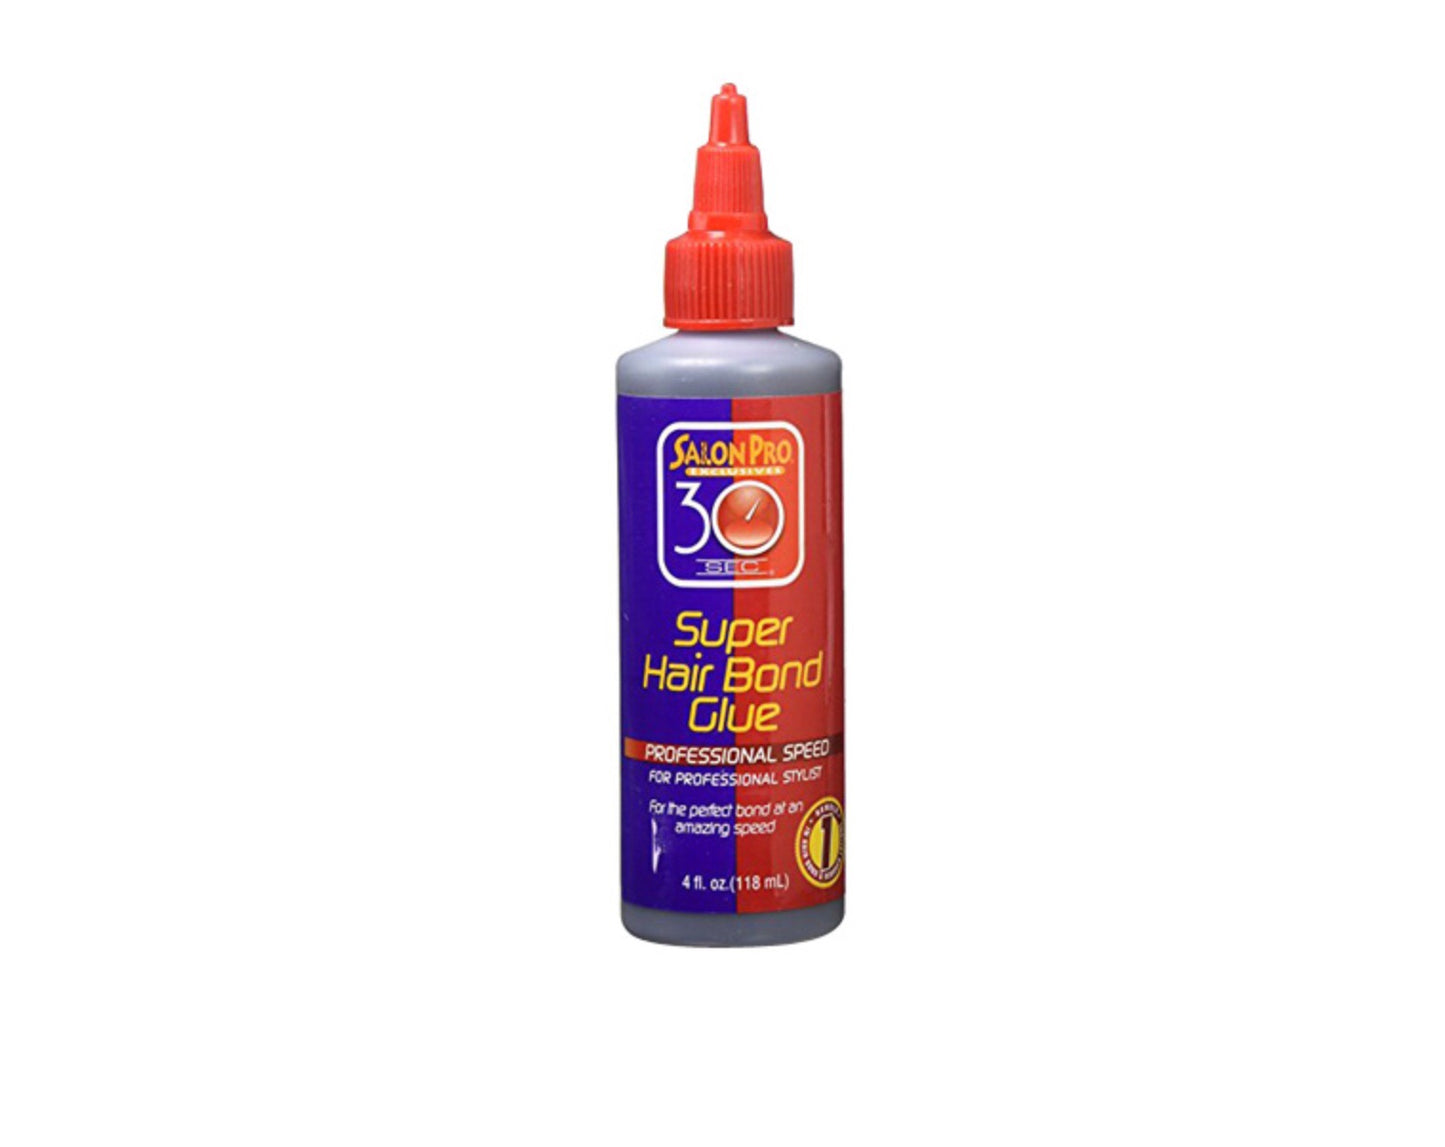 SALON Pro 30 Second Glue